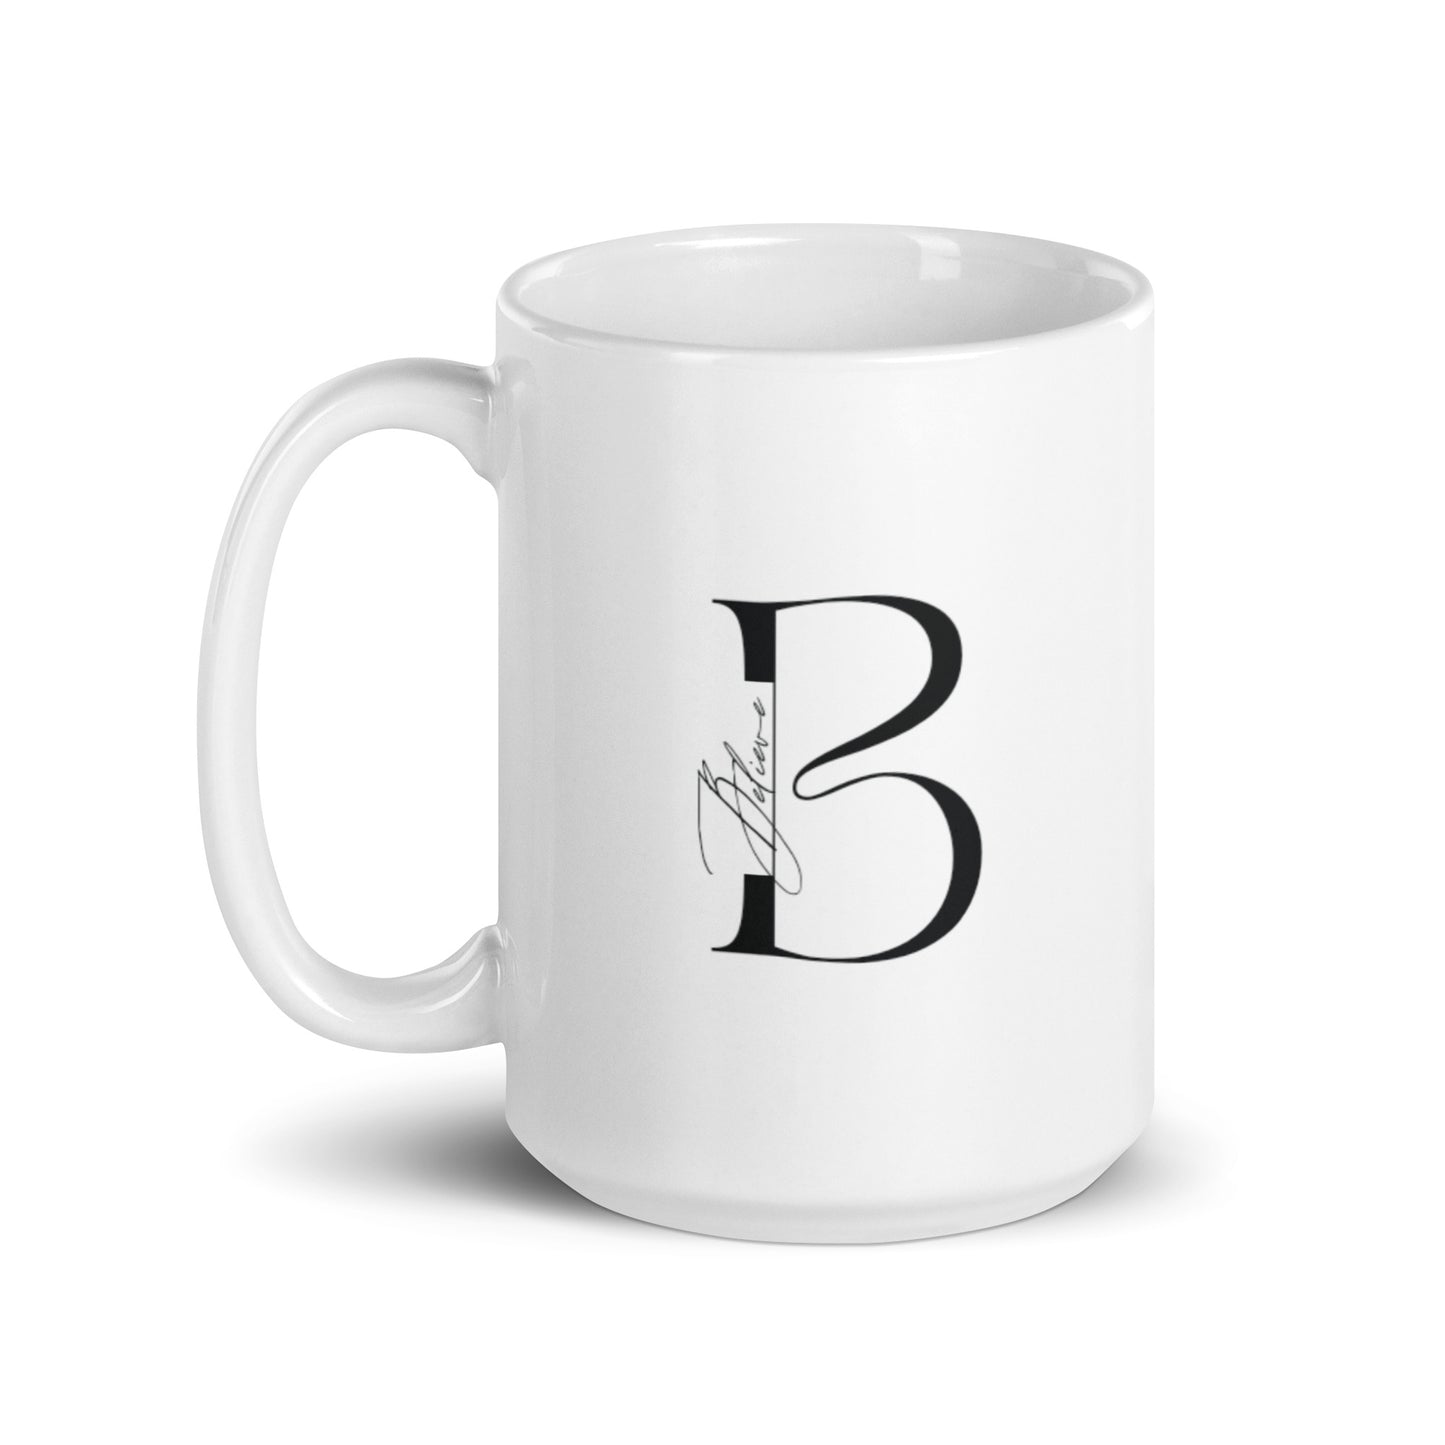 Believe White glossy mug